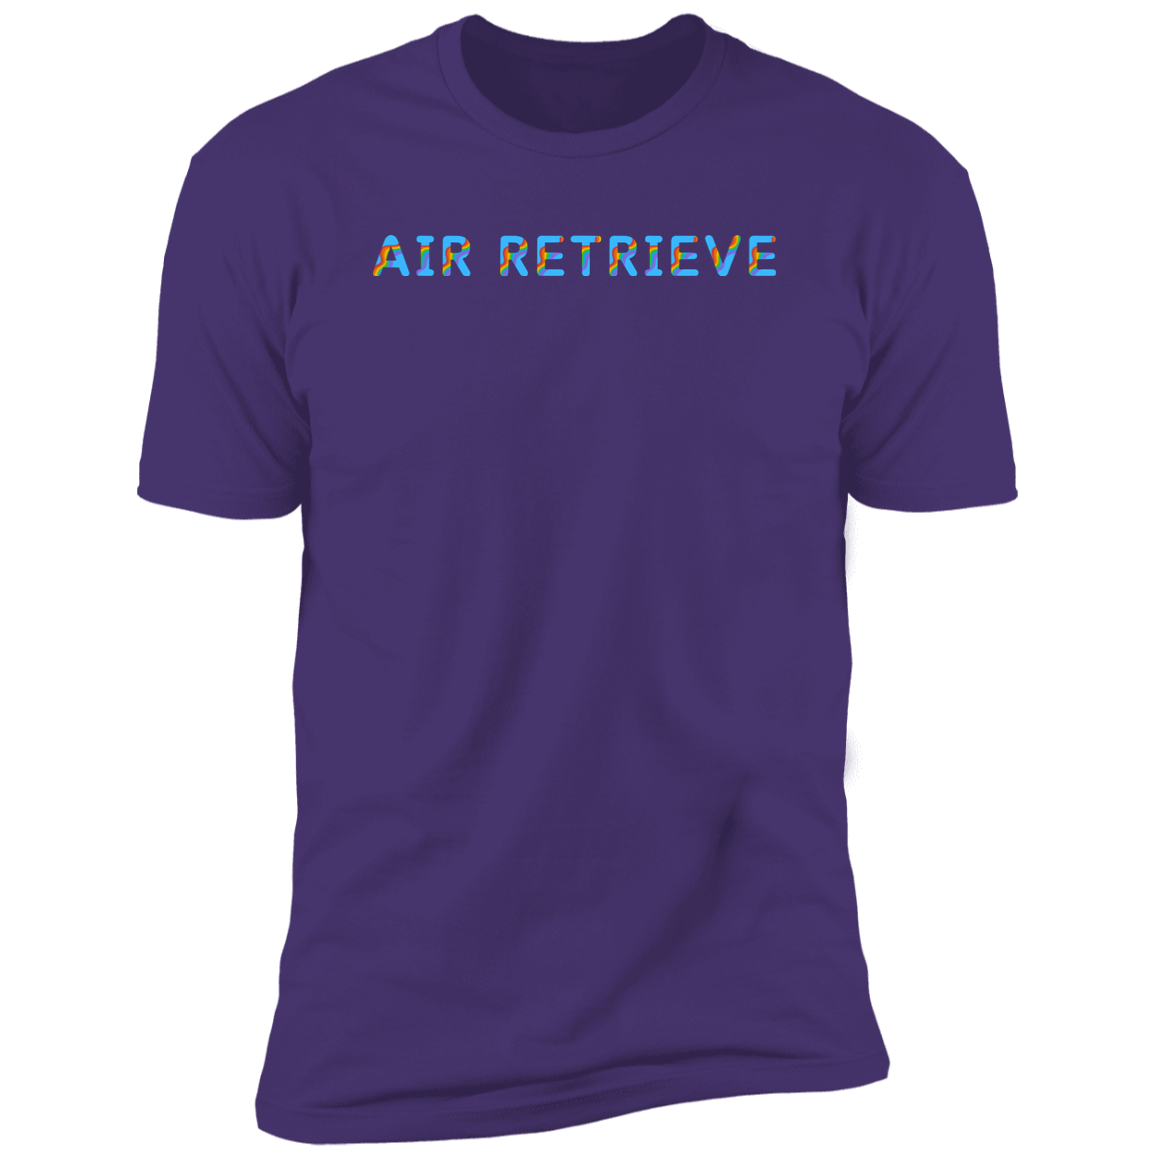 Air Retrieve Pride Dock diving t-shirt, dog pride air retrieve dock diving shirt for humans, in purple rush